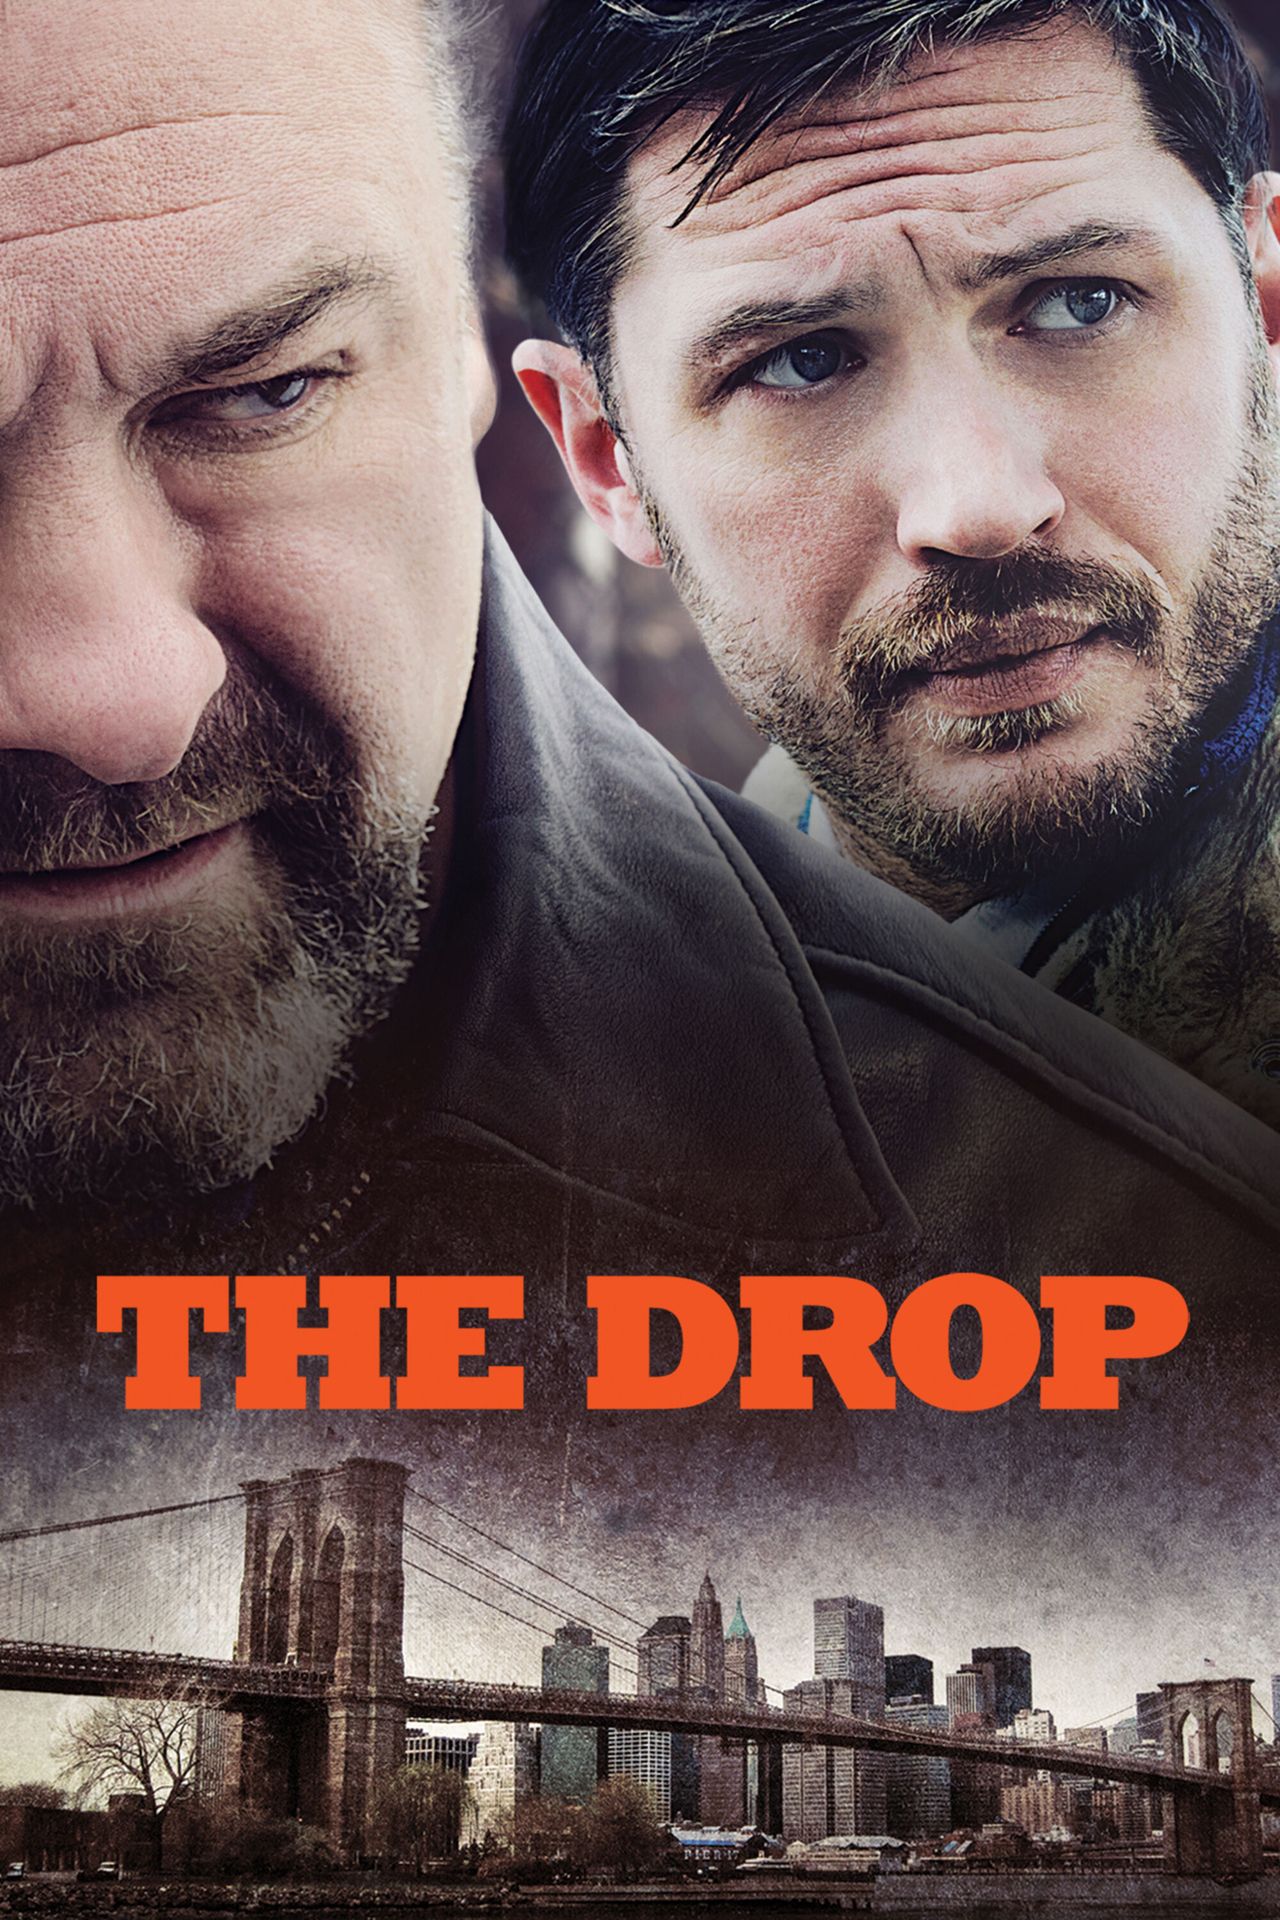 The Drop Official Trailer #2 (2014) - Tom Hardy, James Gandolfini Movie HD  